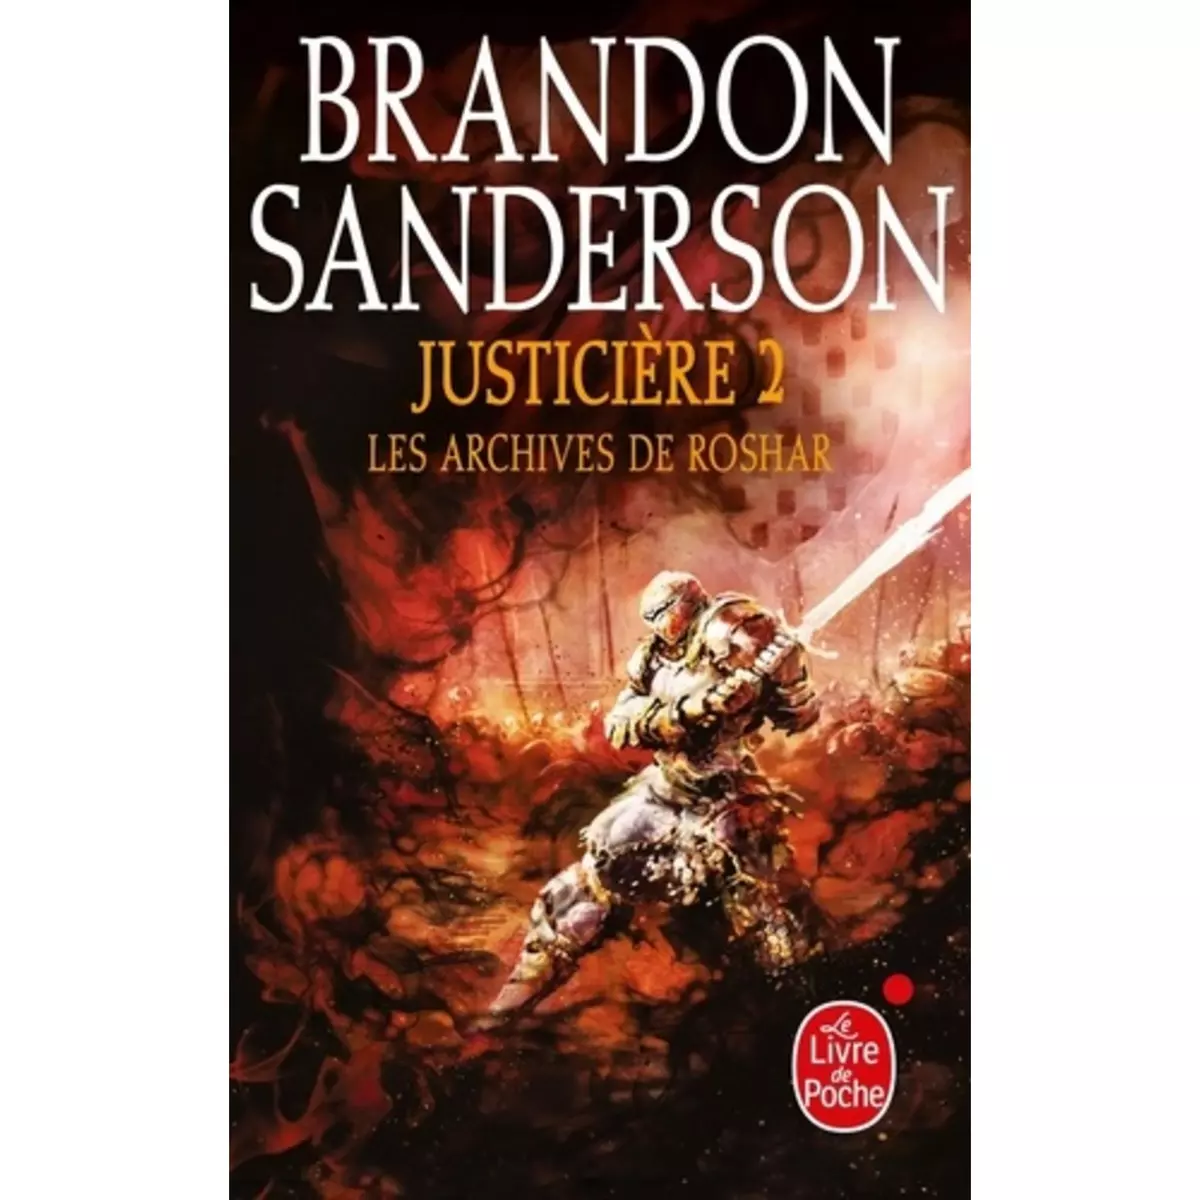  LES ARCHIVES DE ROSHAR TOME 3 : JUSTICIERE. TOME 2, Sanderson Brandon